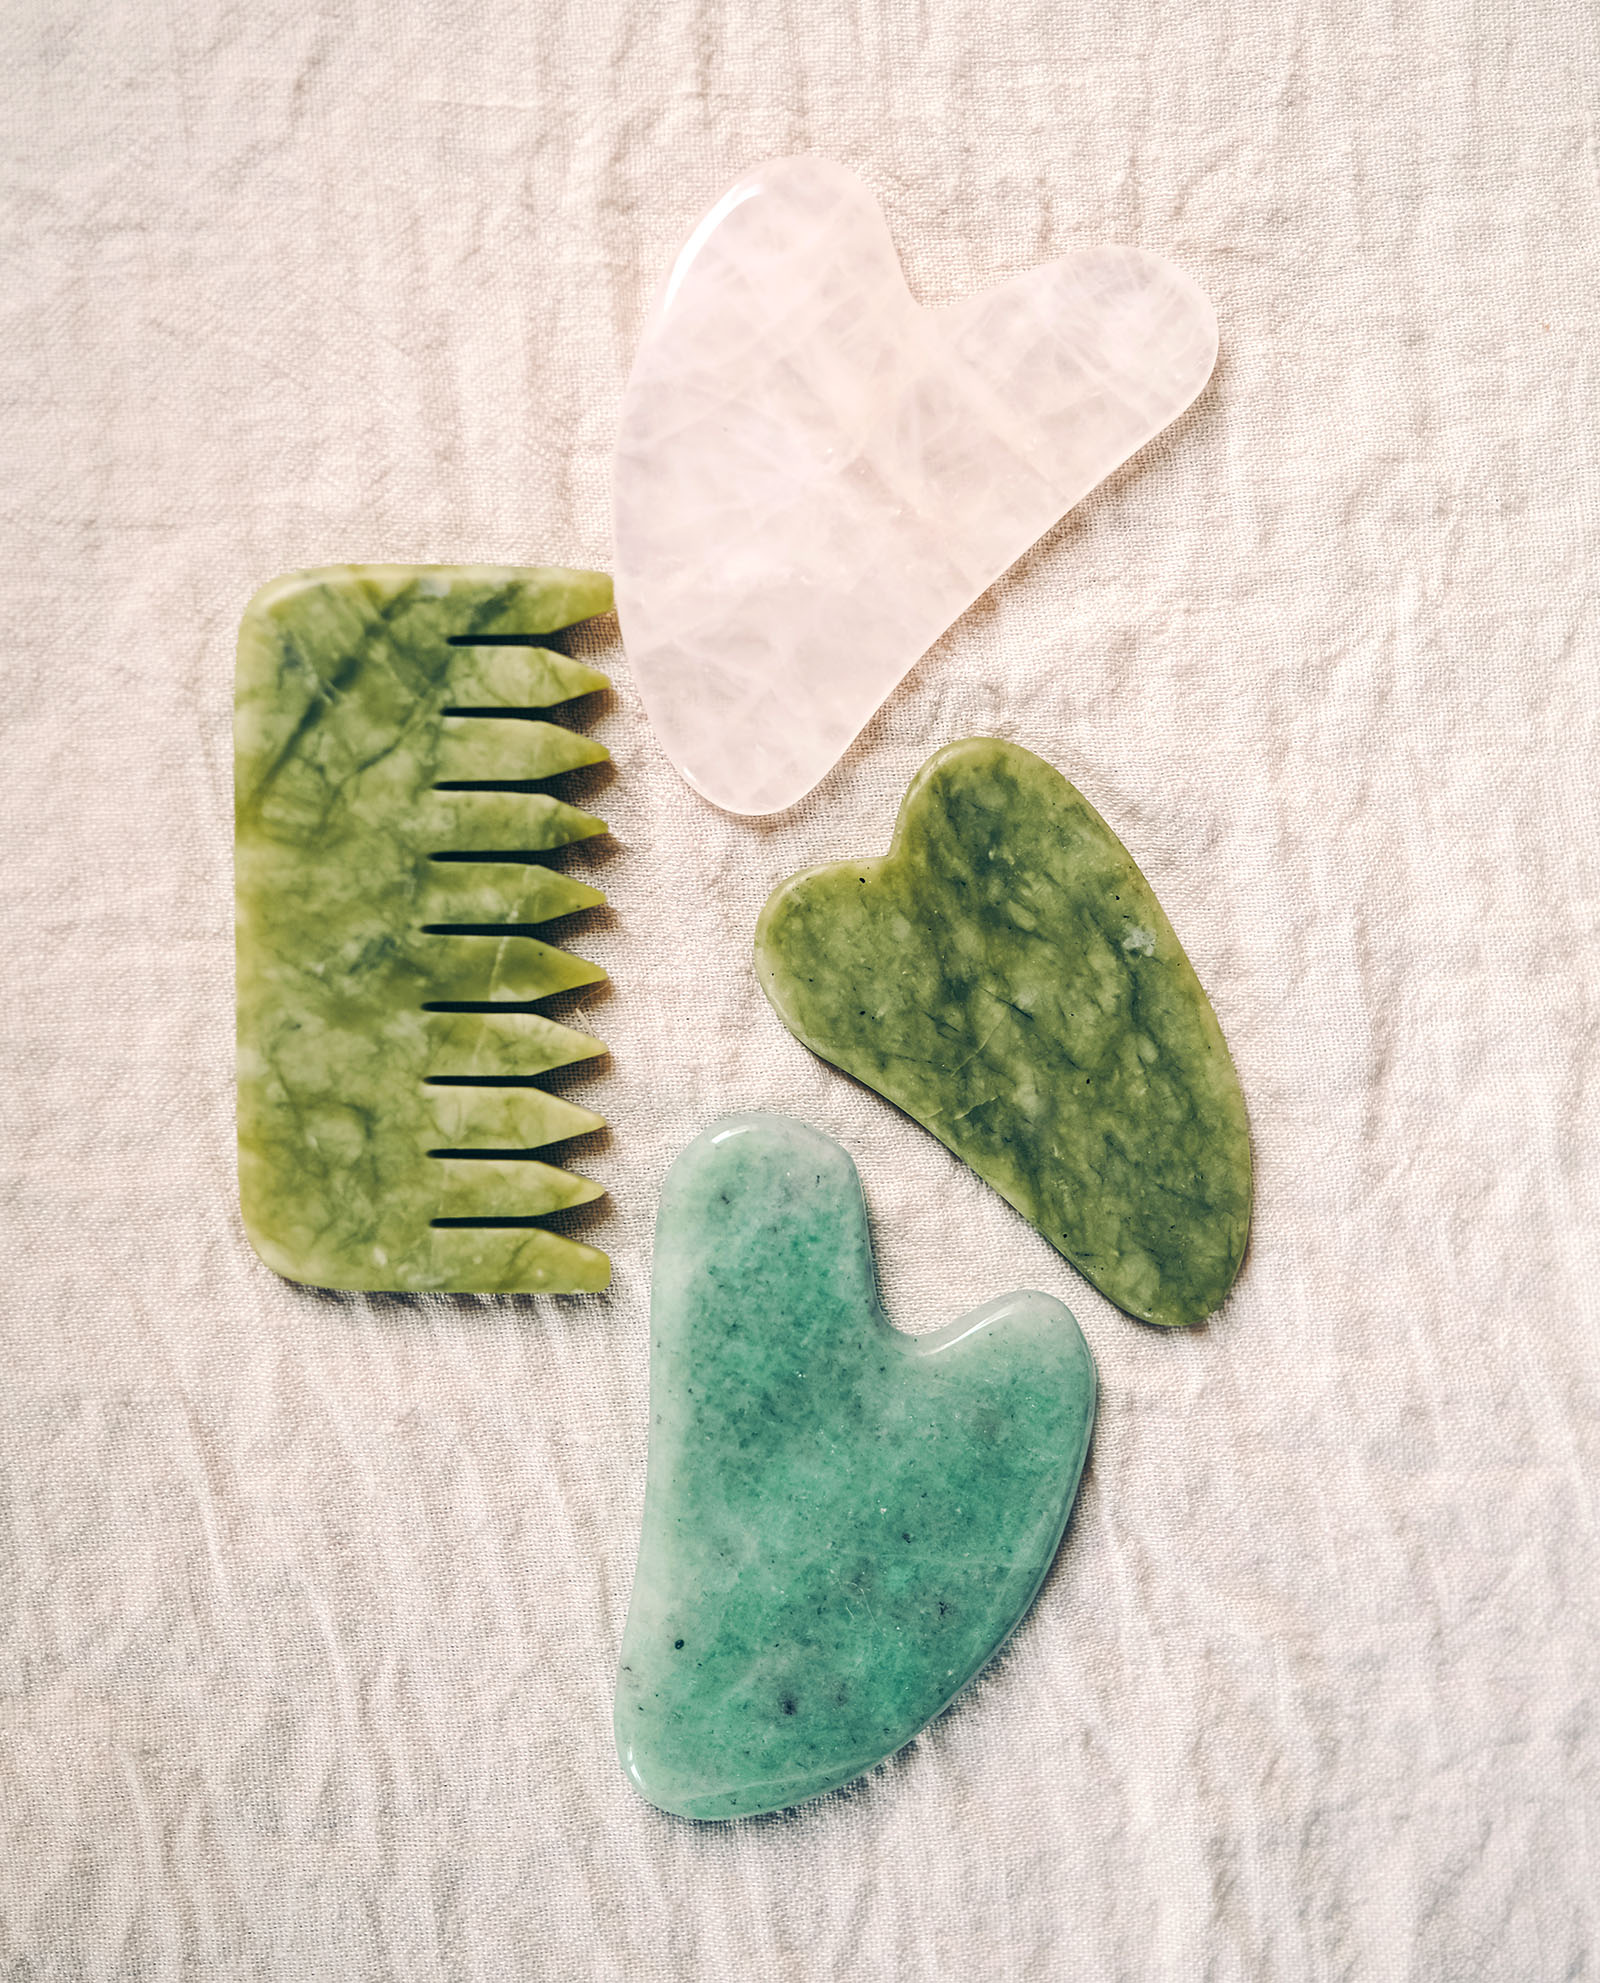 jade combs have several benefits